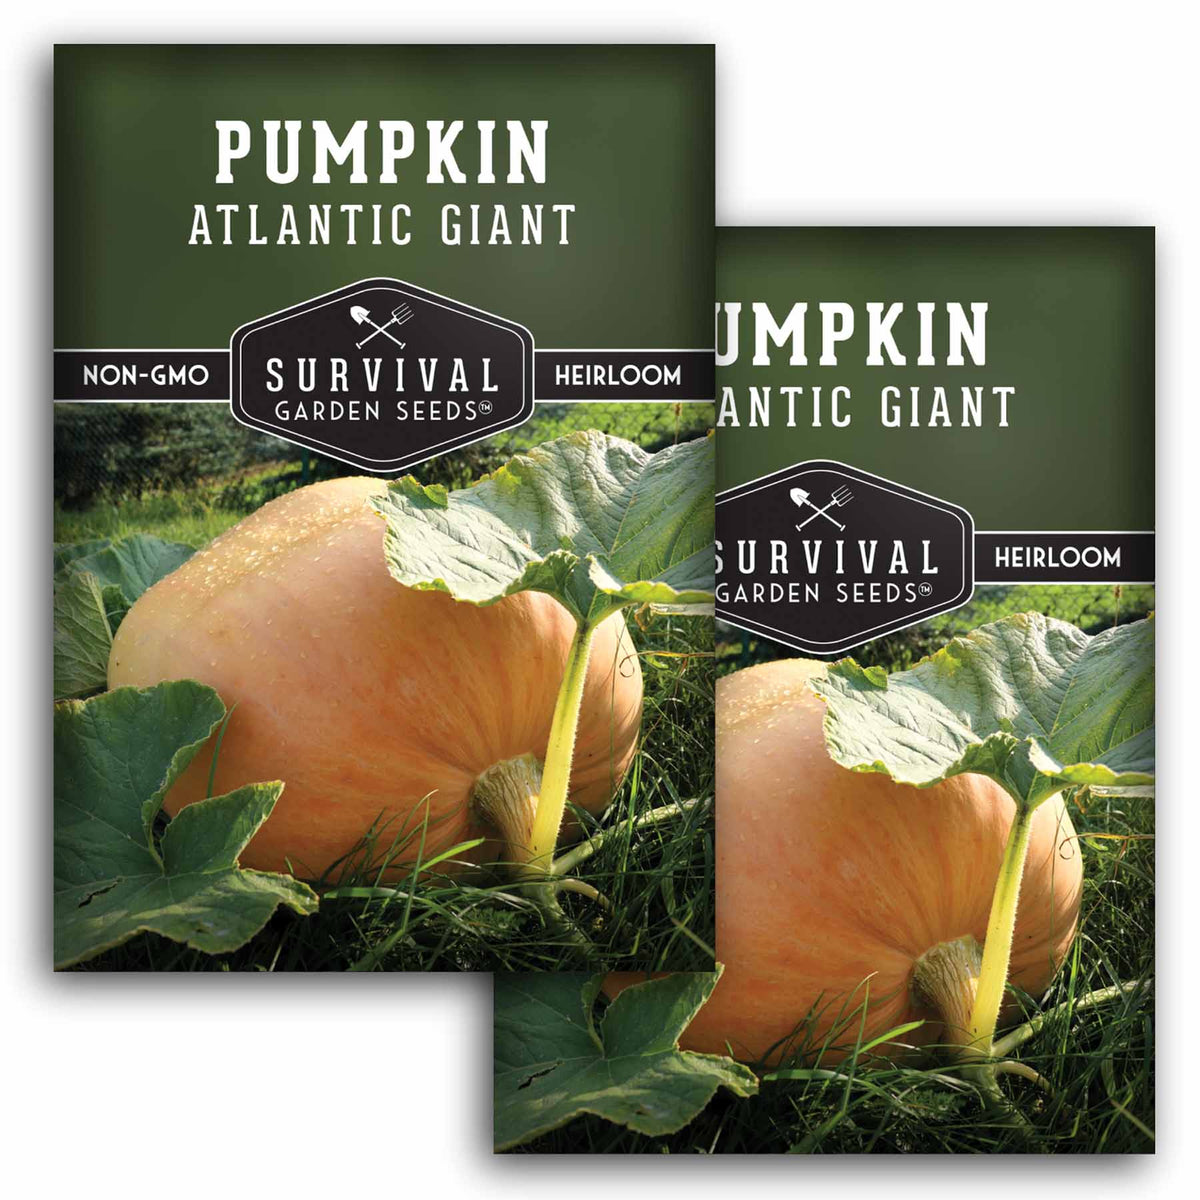 2 packets of Atlantic Giant Pumpkin seeds